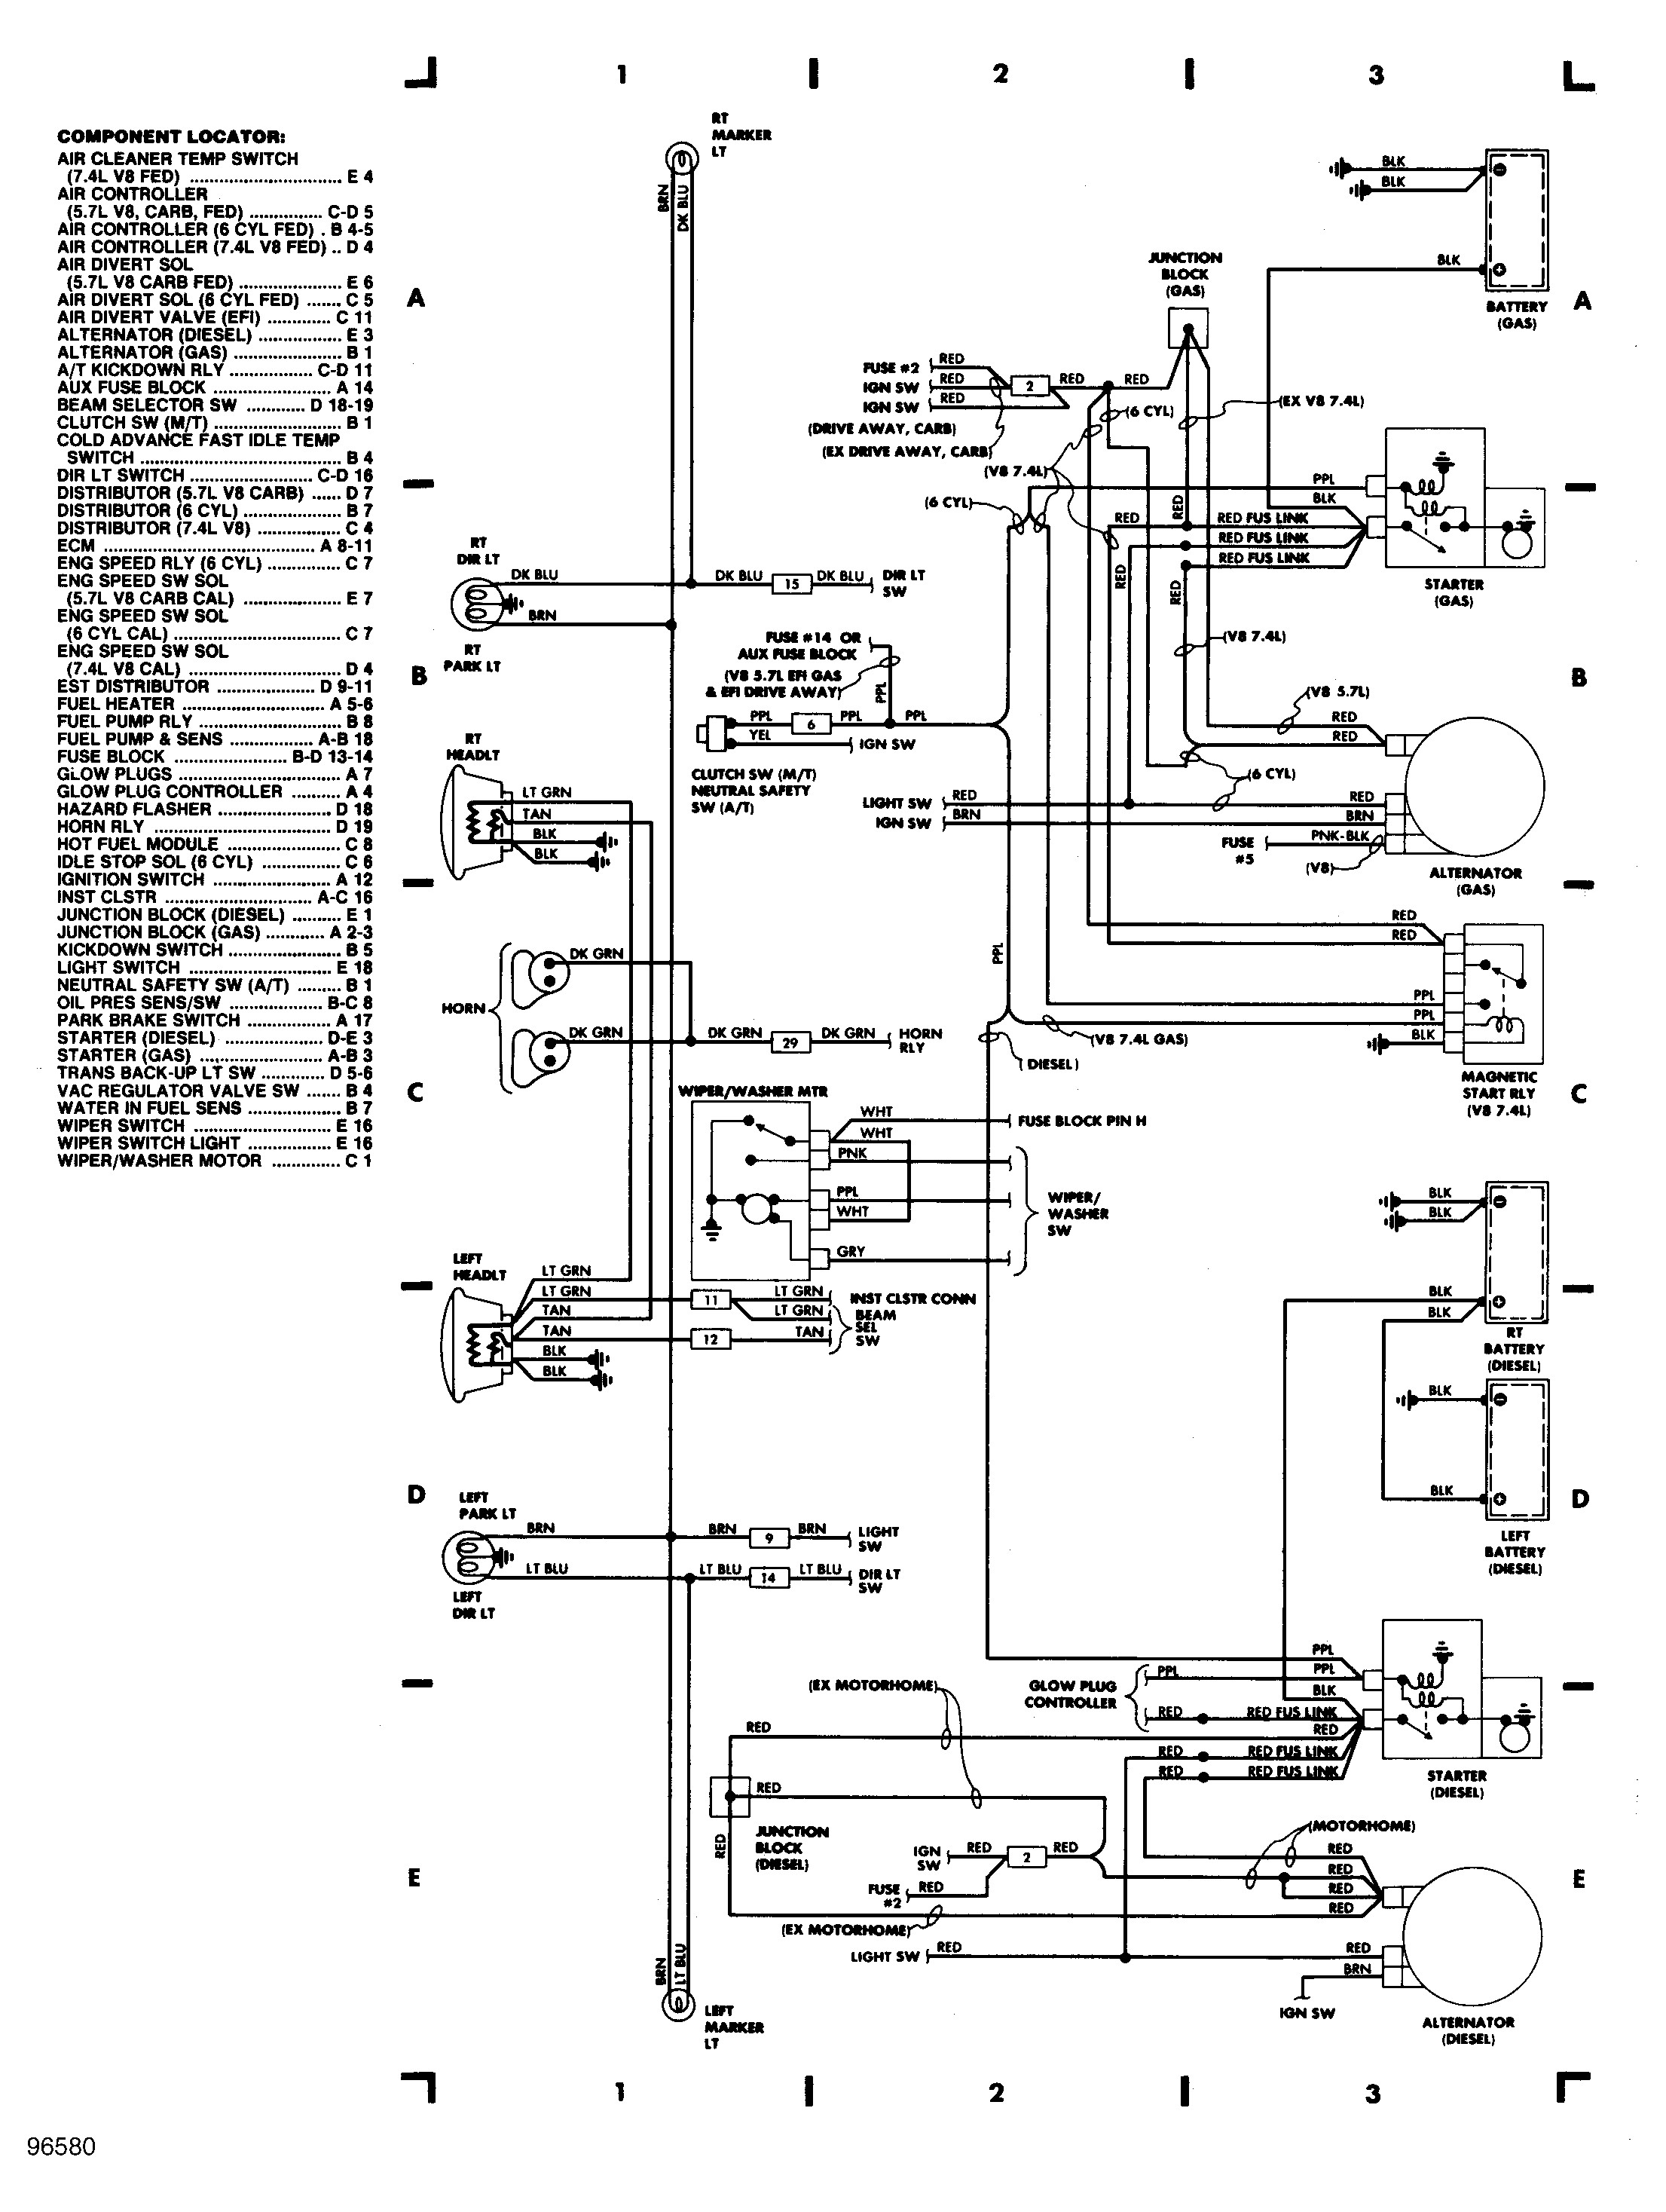 Chevy Cavalier Engine Diagram Chevy P30 Wiring Diagram Wiring Diagram Of Chevy Cavalier Engine Diagram